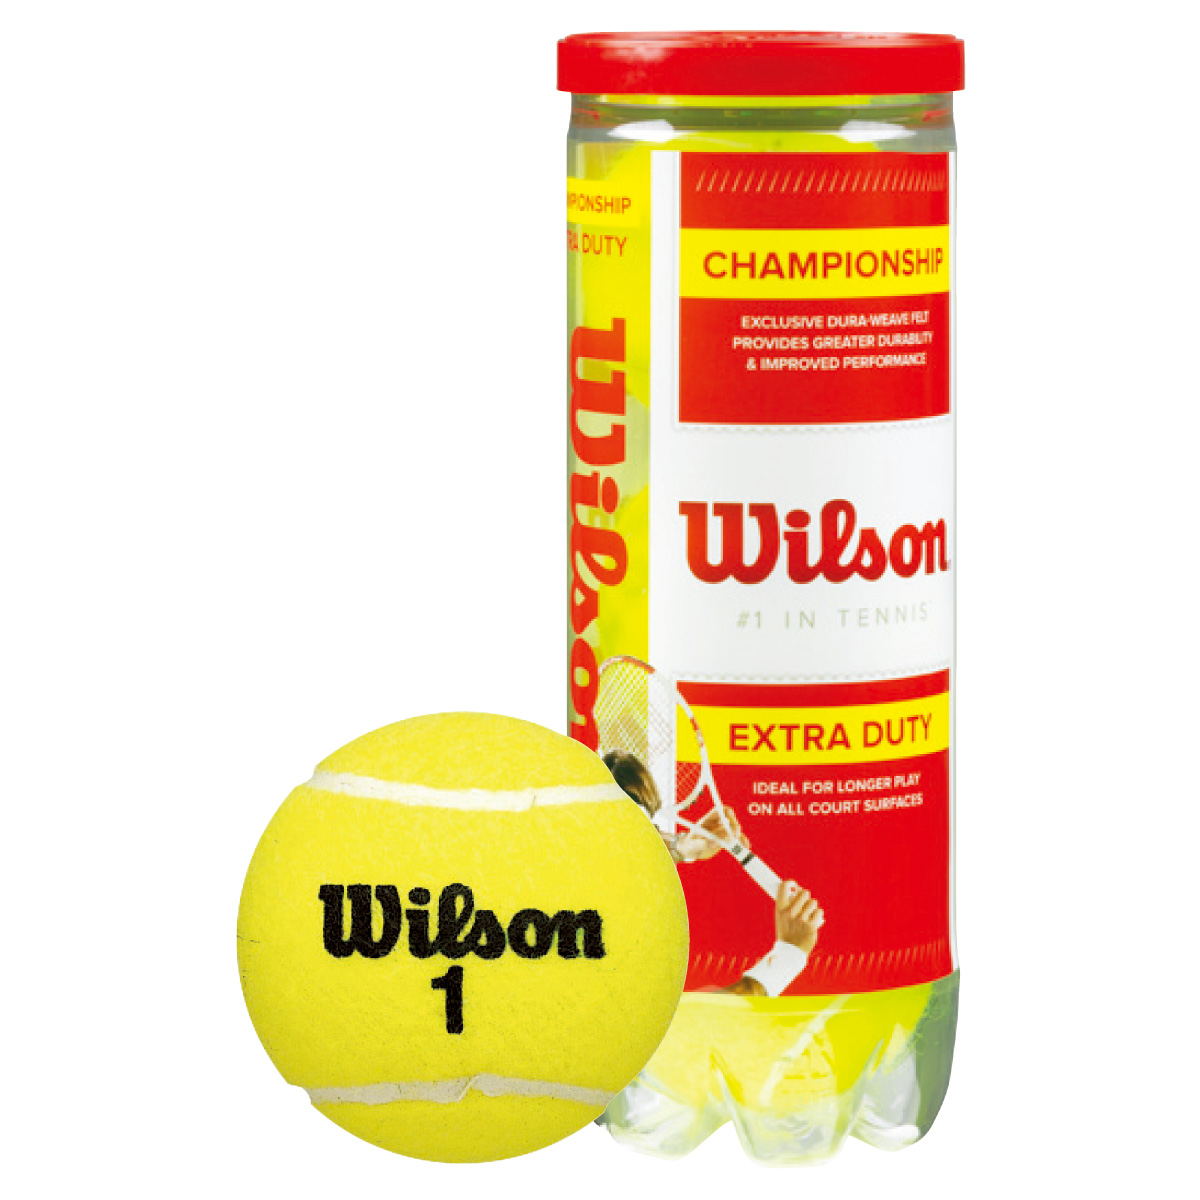 ＮＥＷ 残りわずか ウイルソン 硬式テニスボール チャンピオンシップ エキストラ 3球入1缶テニスボール お得な情報満載 wrt100101 球 デューティ